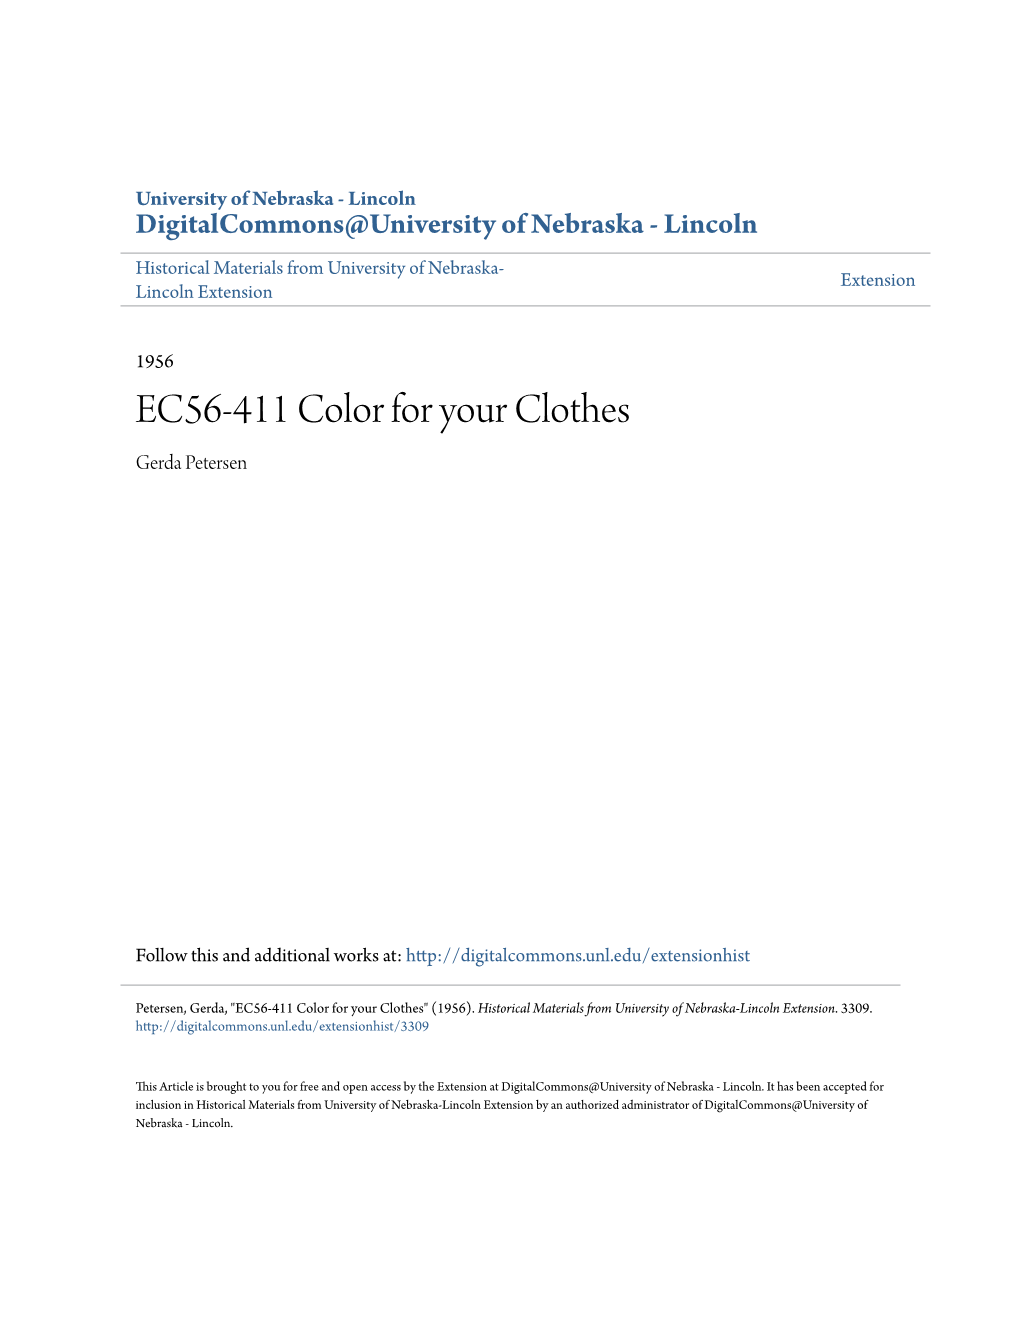 EC56-411 Color for Your Clothes Gerda Petersen